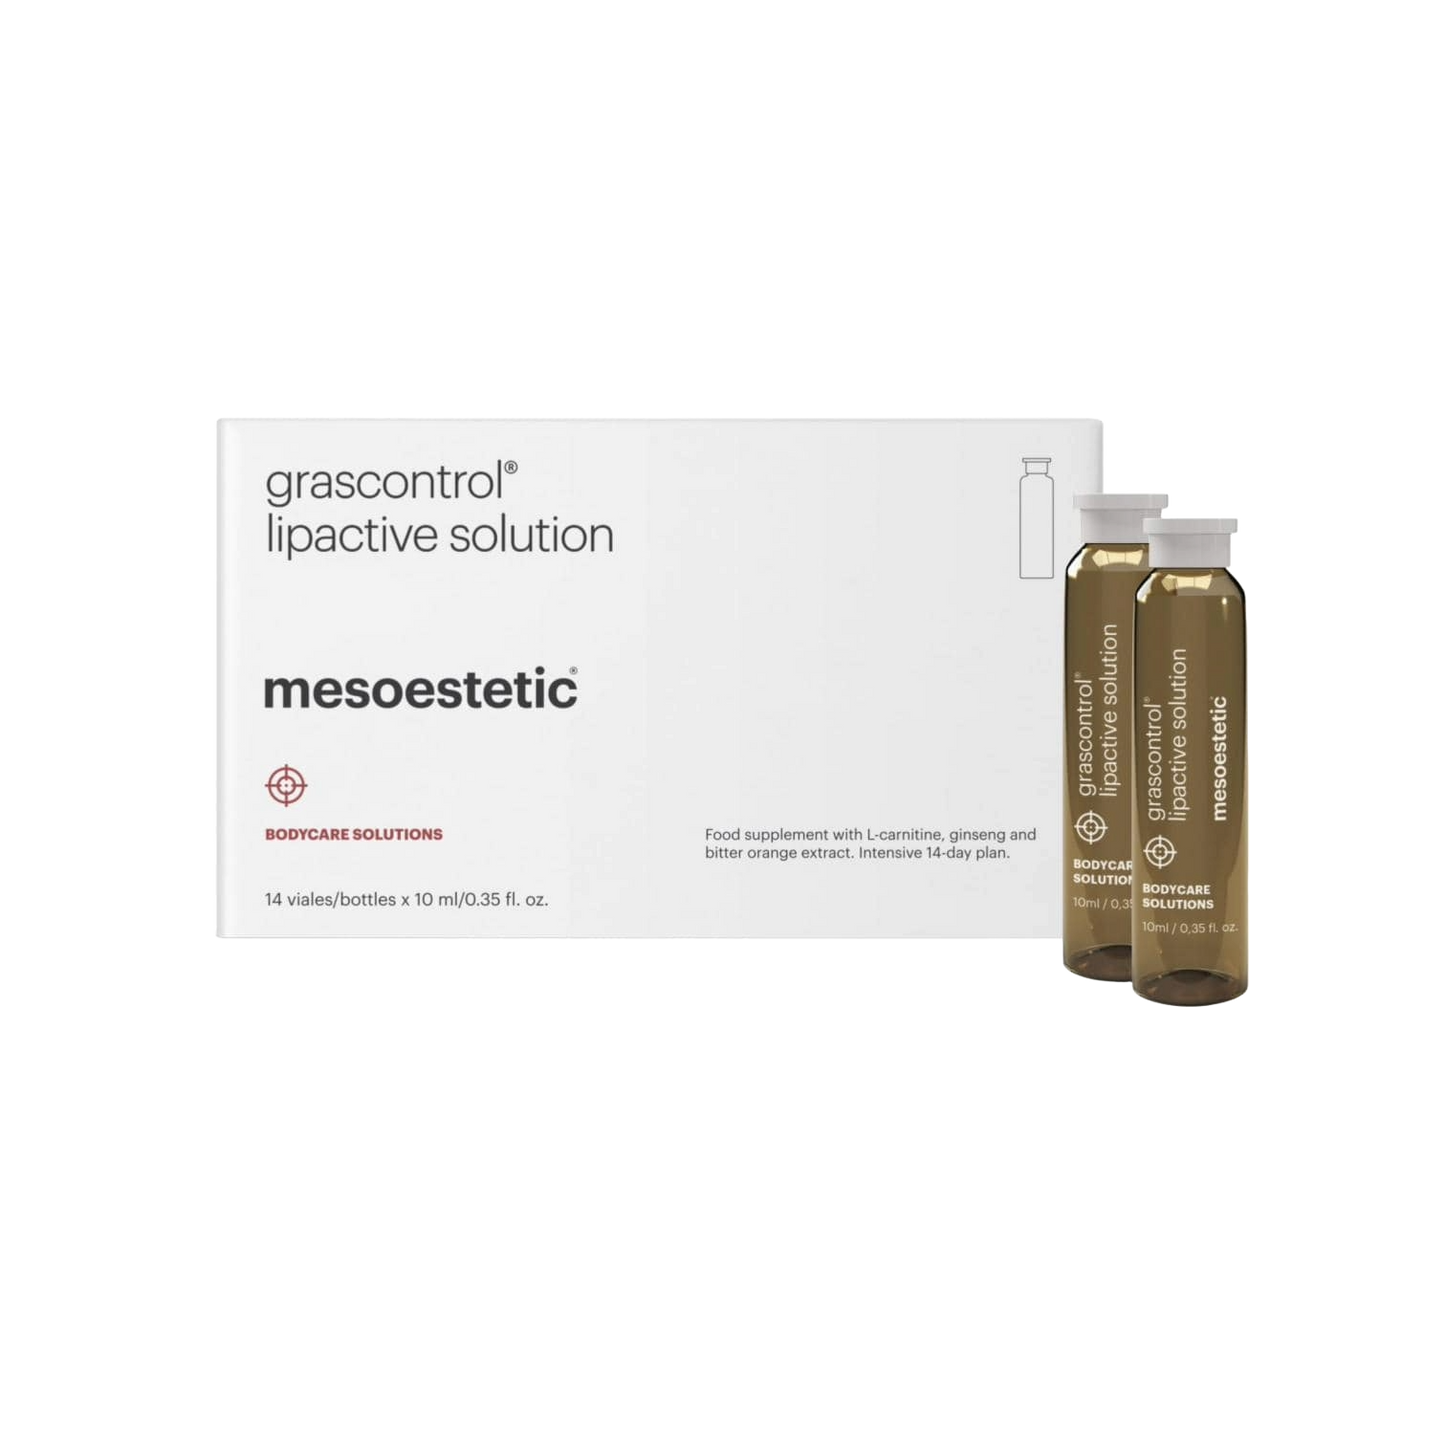 Mesoestetic Grascontrol Lipactive Solution 20% KORTING vanaf 2 stuks